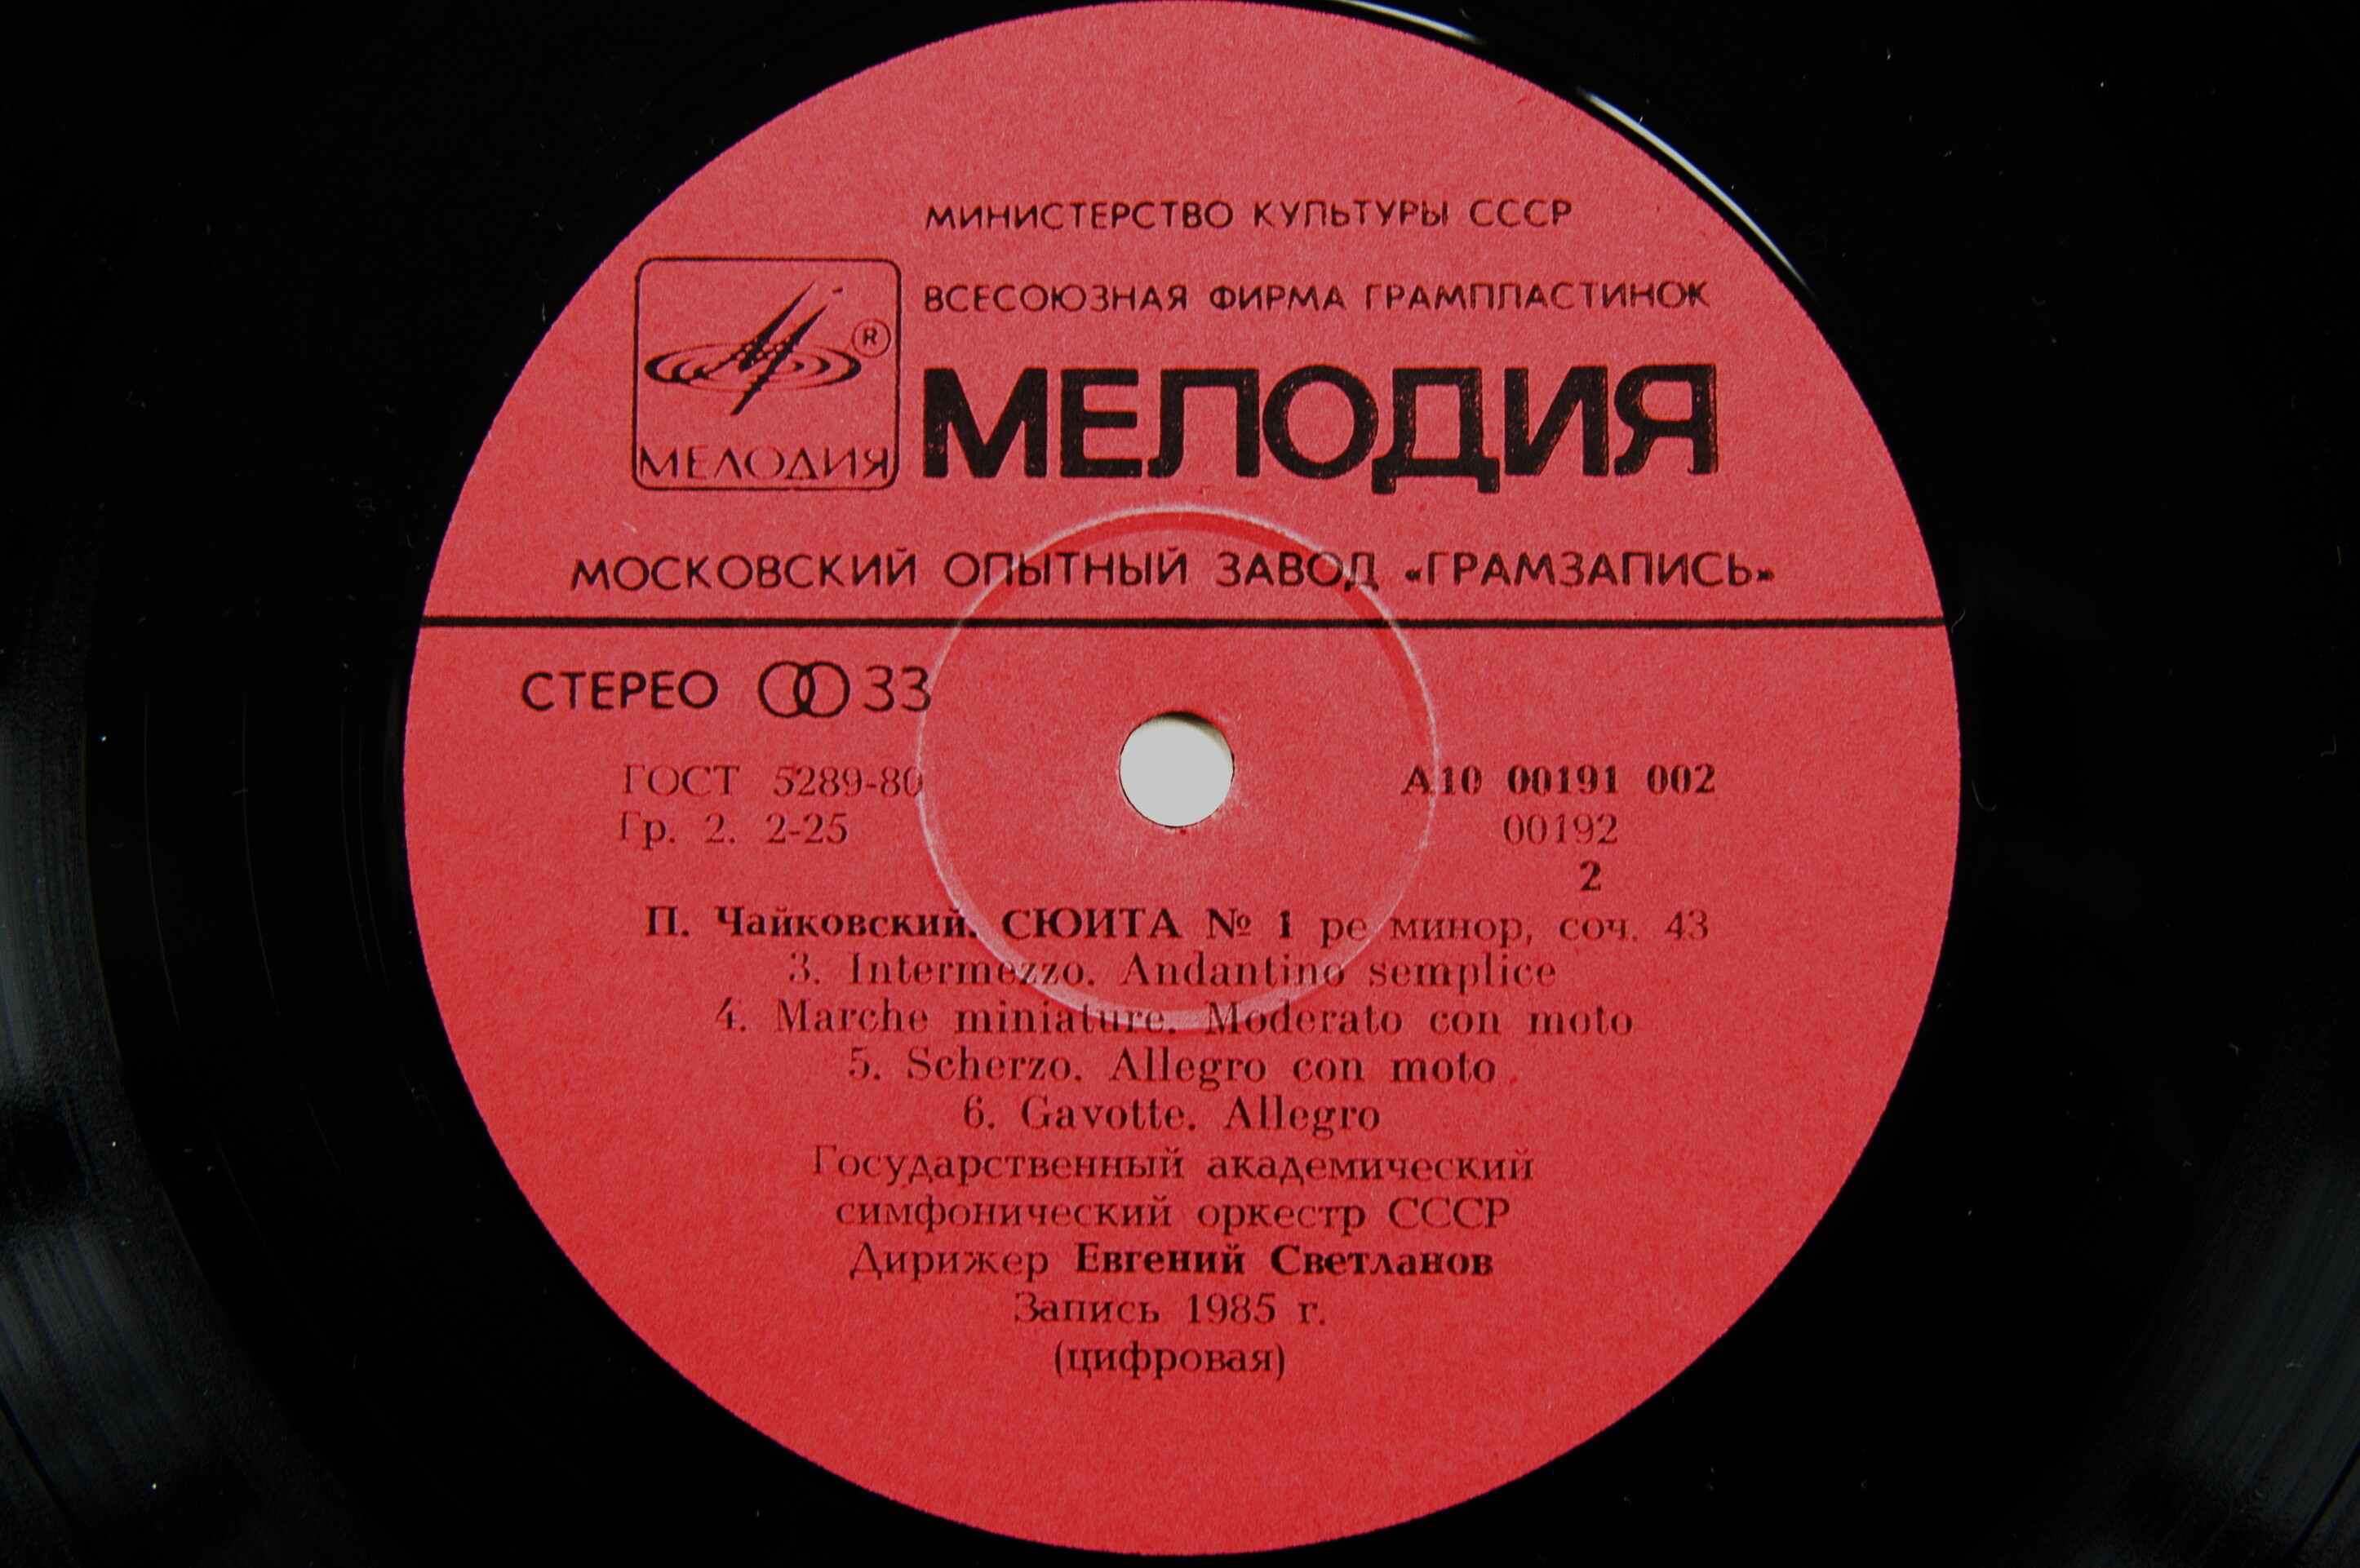 П. Чайковский: Сюита № 1 ре минор, соч. 43 (Е. Светланов)